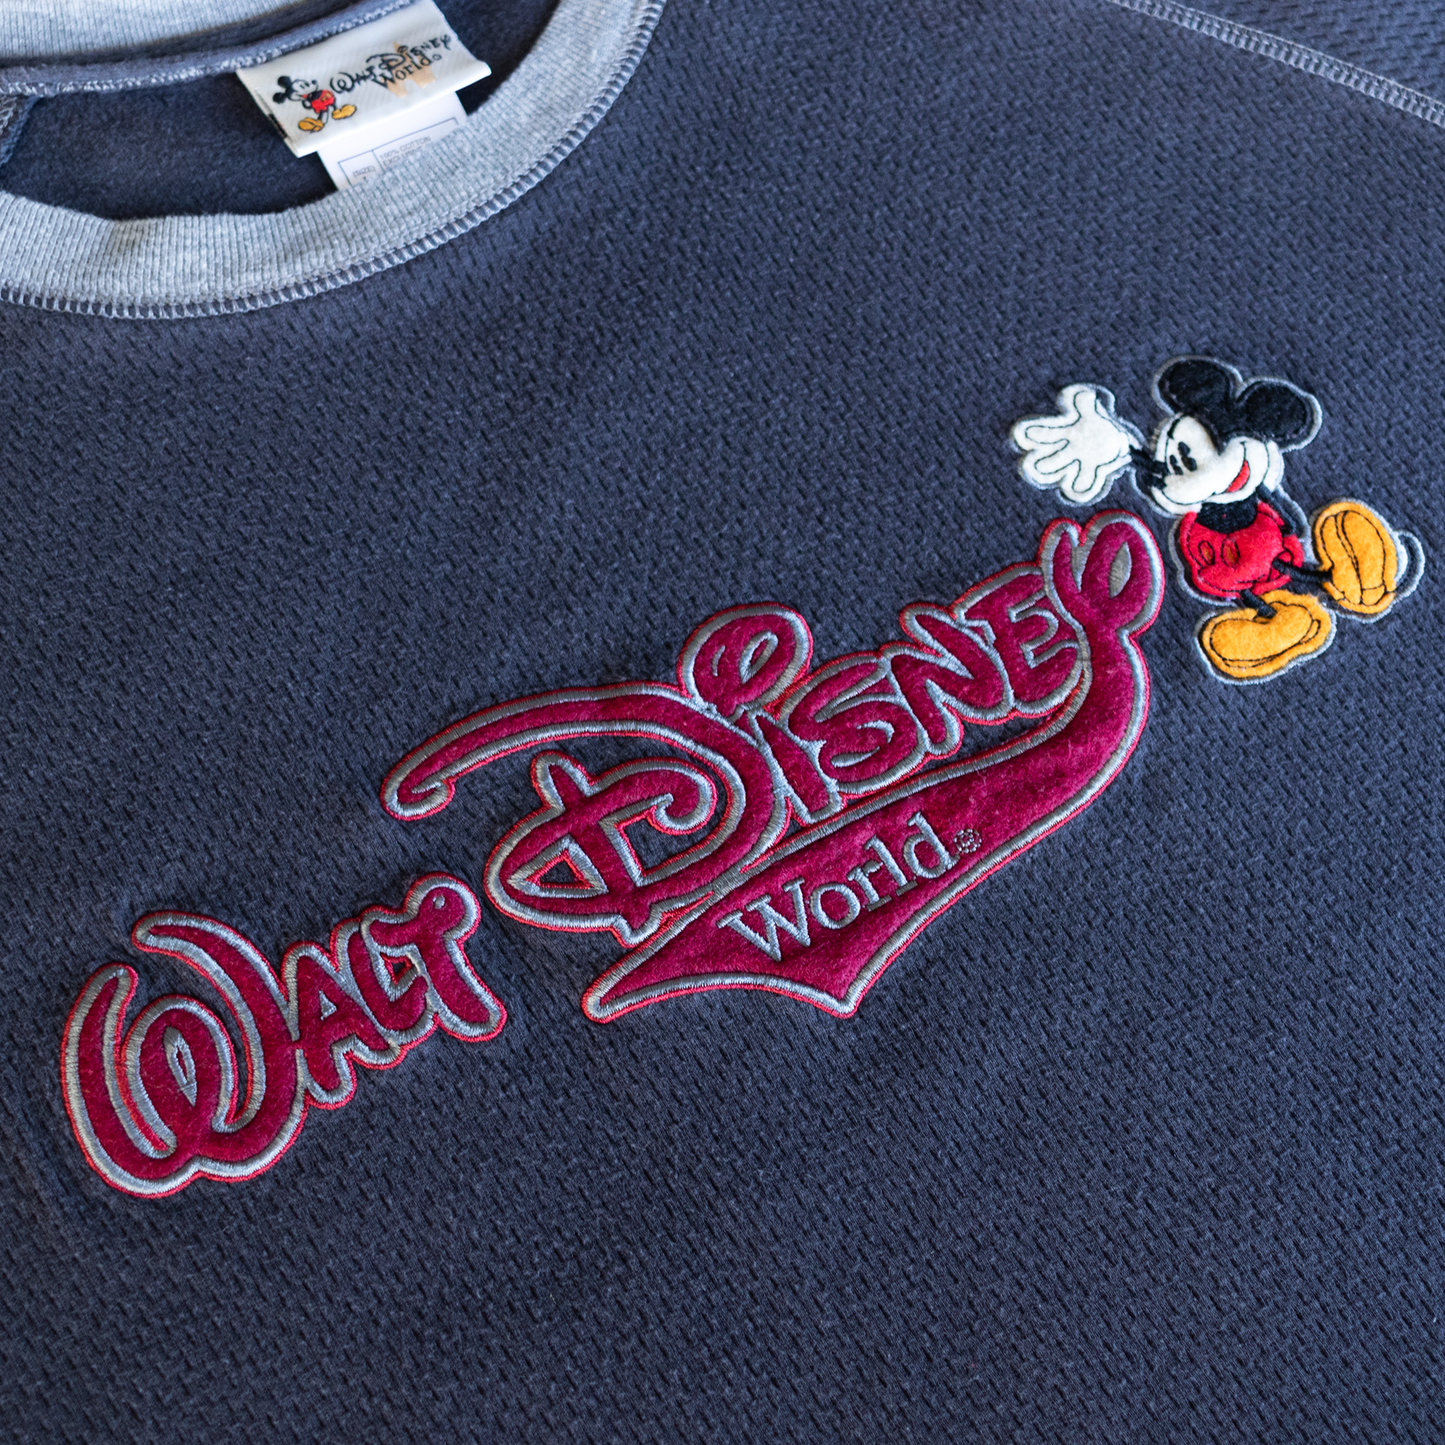 Vintage Walt Disney World Mickey Mouse Logo Graphic T-Shirt (L)